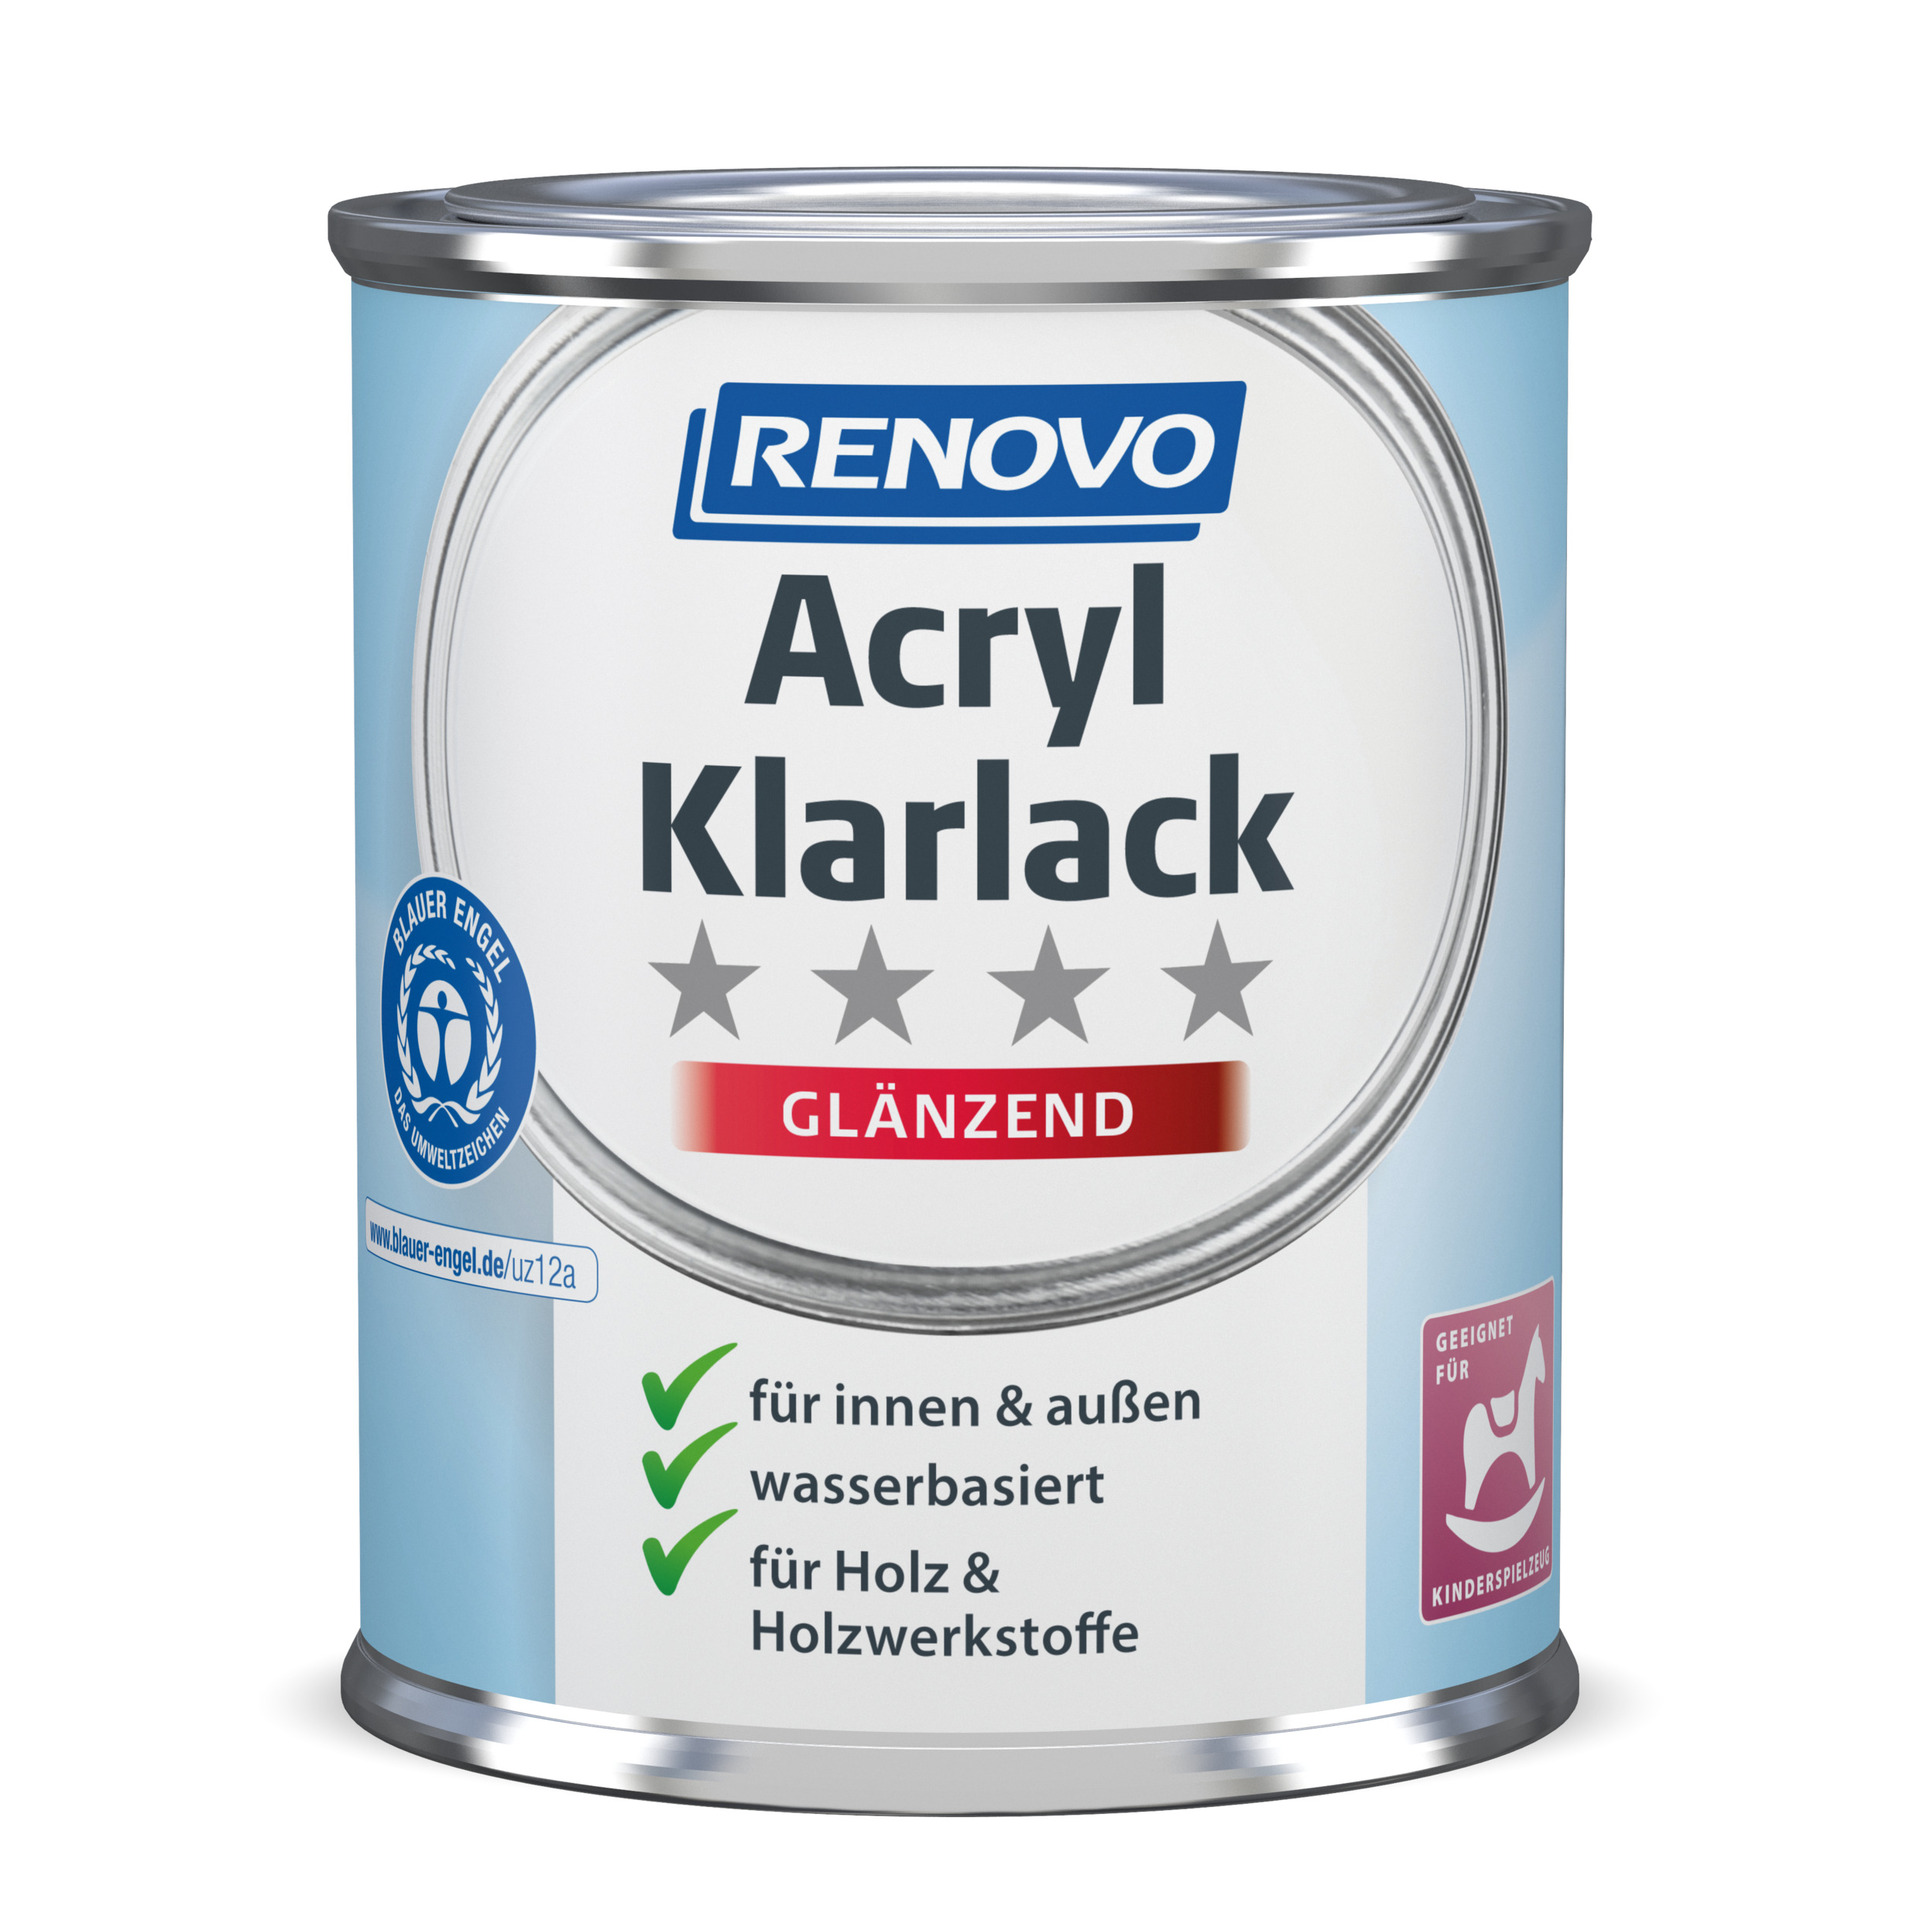 Acryl Klarlack farblos